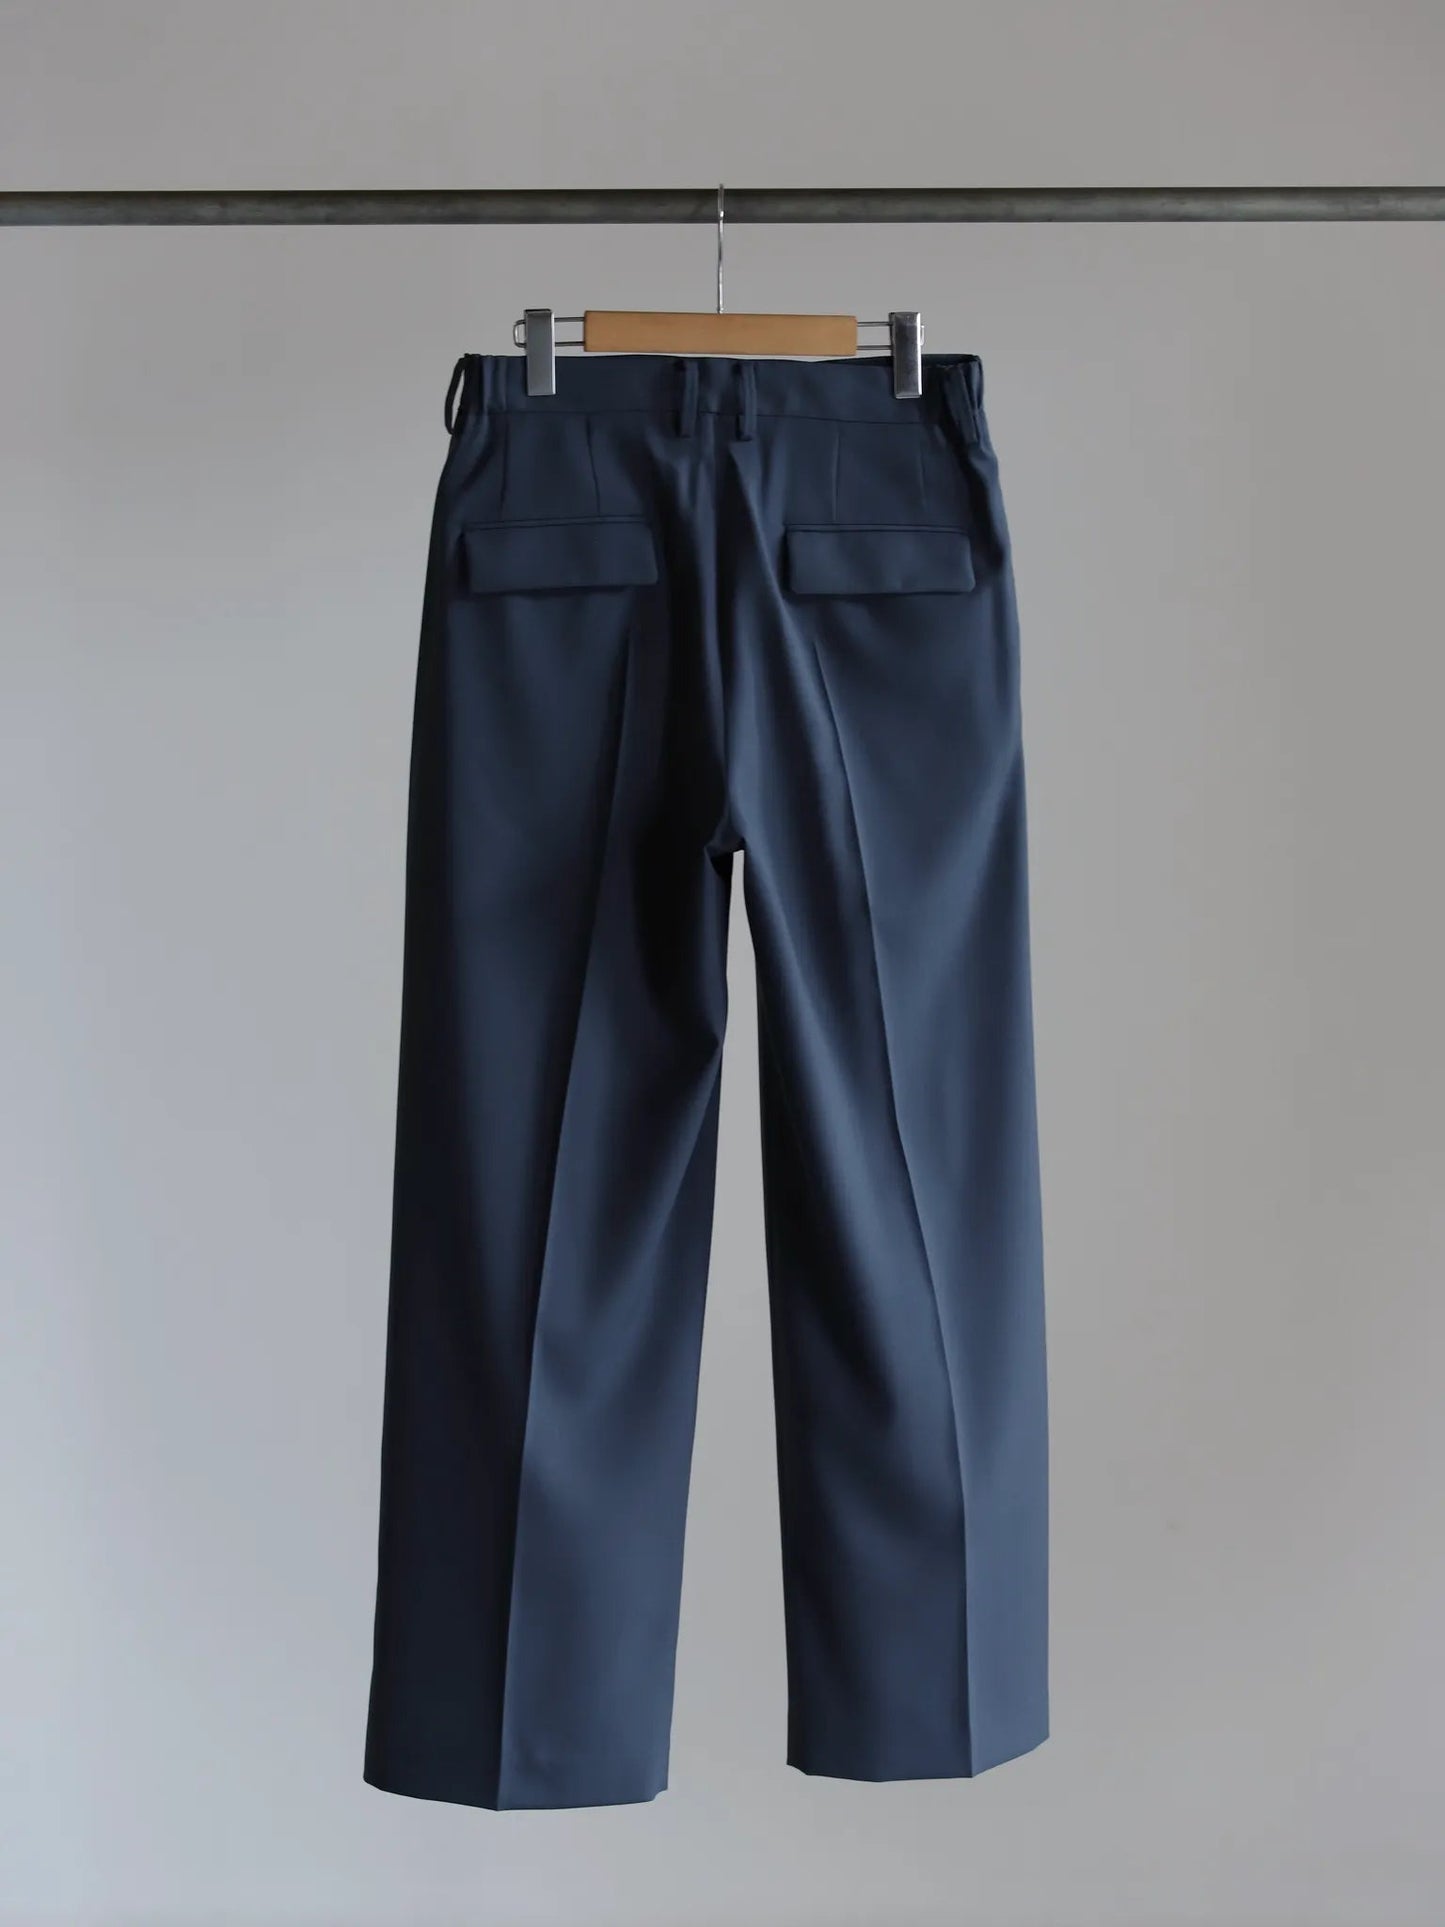 irenisa-two-tucks-wide-pants-blue-gray-2